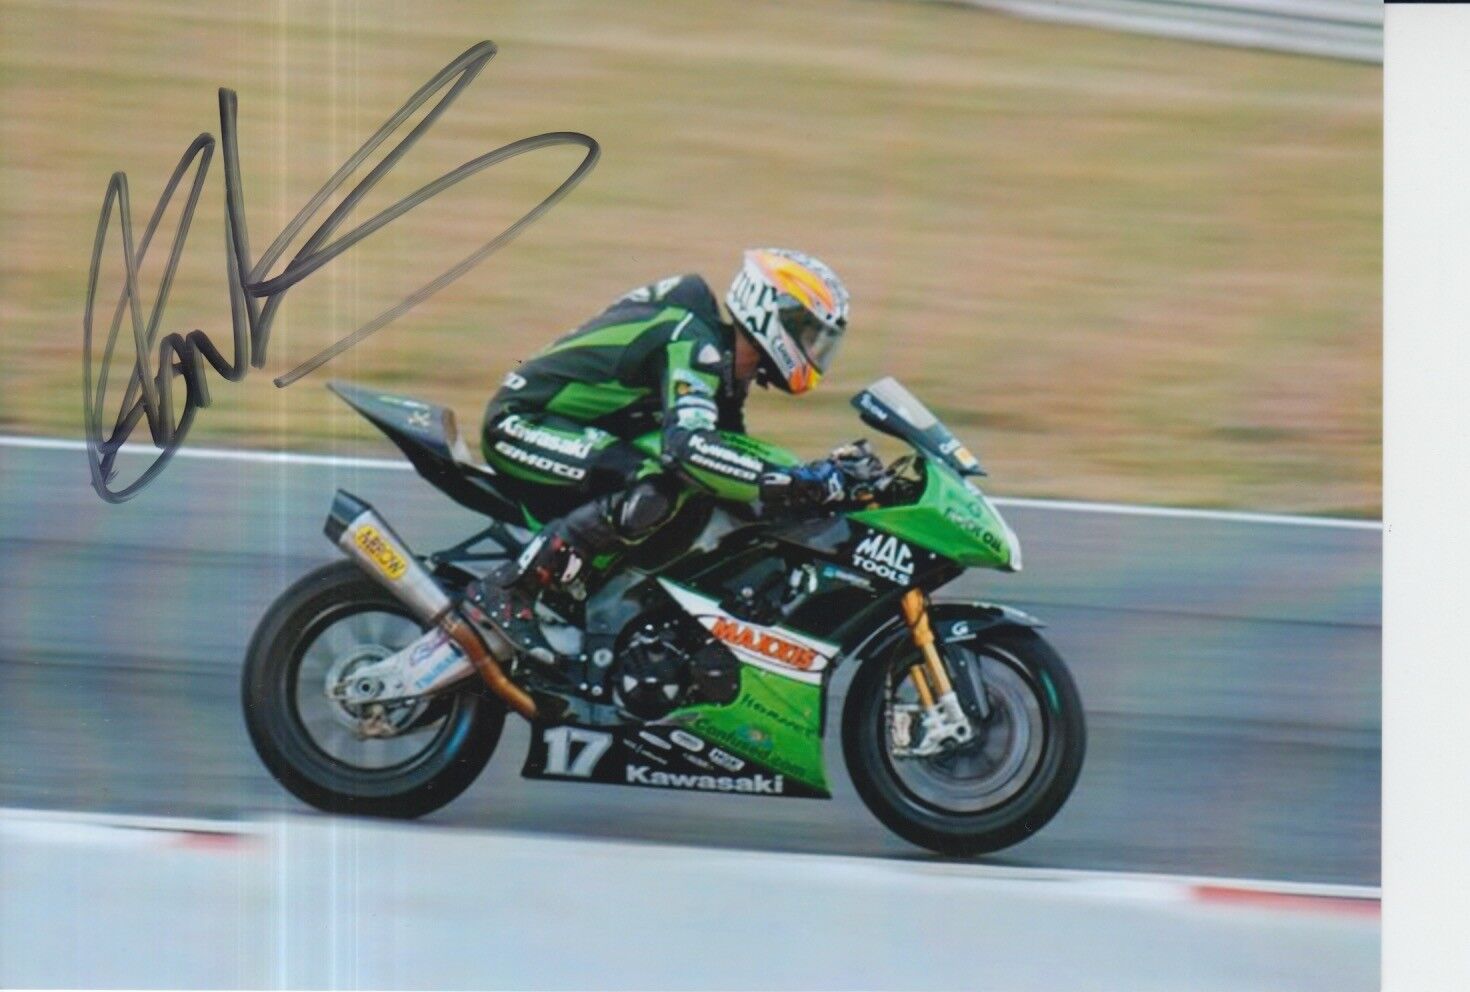 Simon Andrews Hand Signed 7x5 Photo Poster painting BSB, MotoGP, WSBK 4.